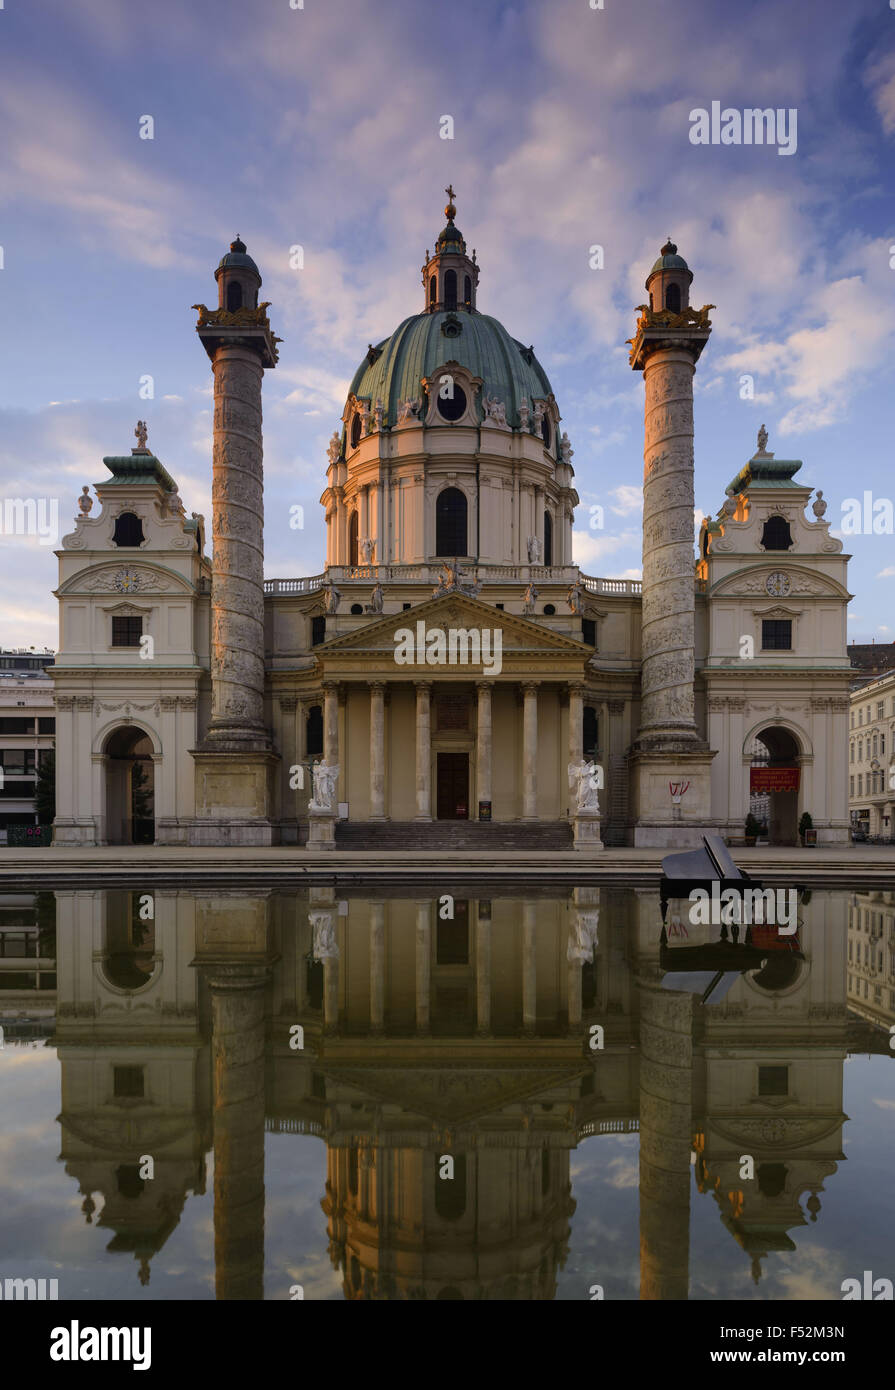 L'Autriche, Vienne, Karlsplatz (square), Karlskirche, construit par Johann Bernhard Fischer von Erlach en 1716-1737 dans le style du baroque Banque D'Images